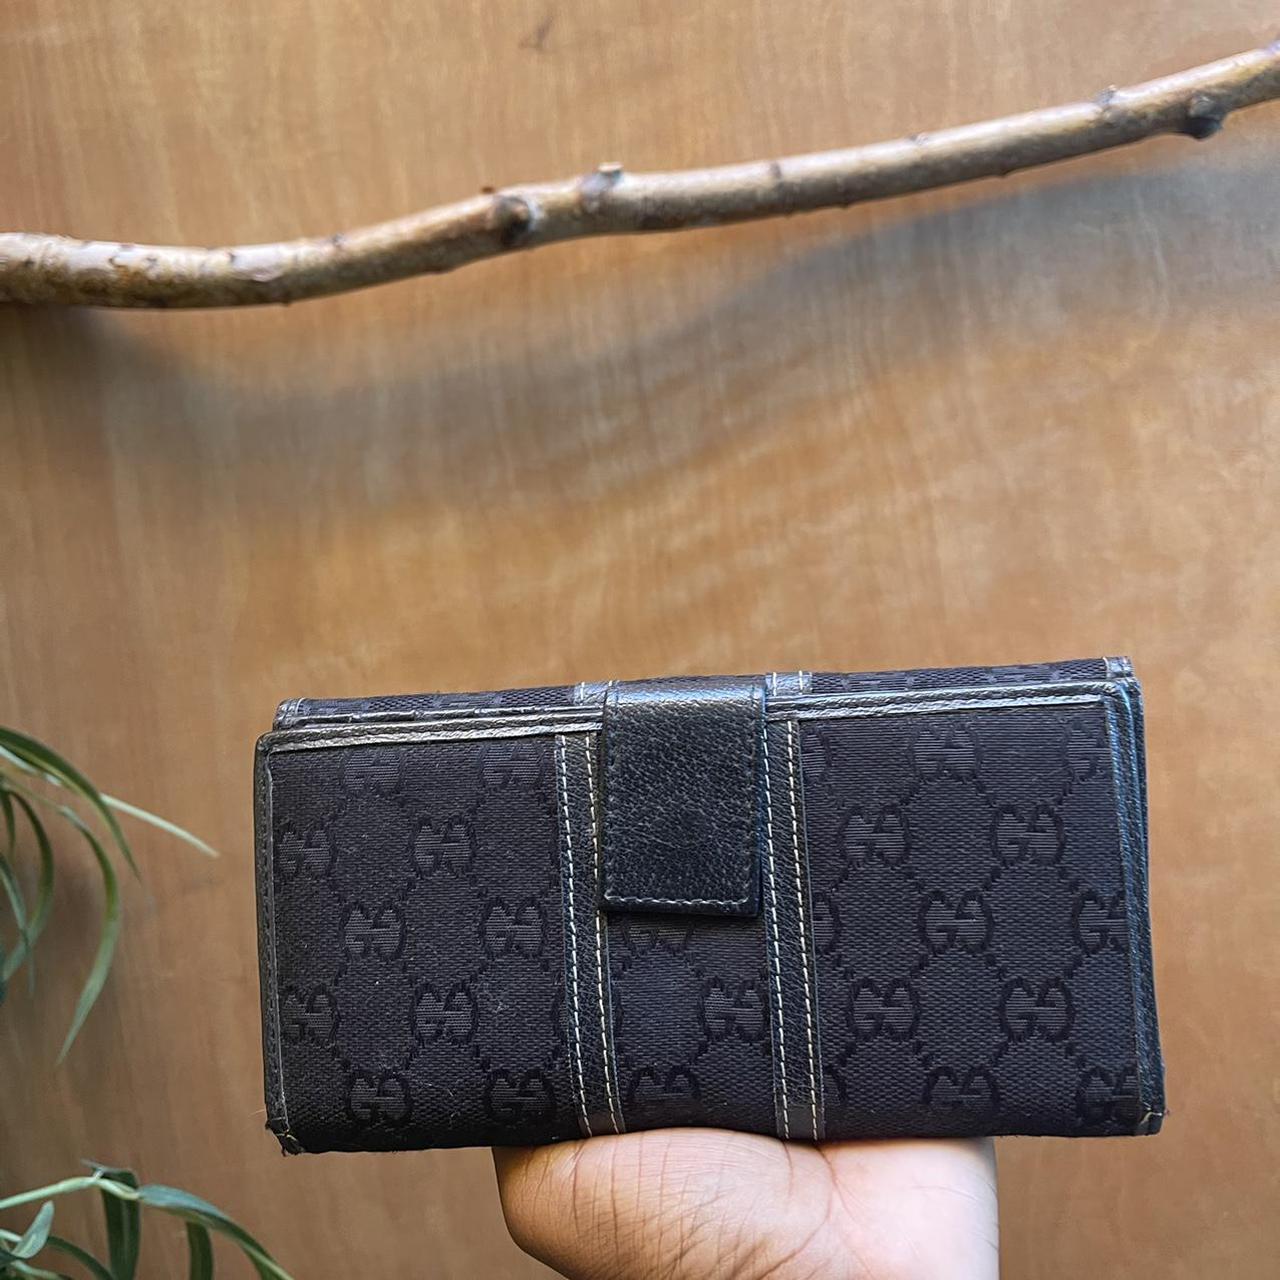 Product Image 2 - Vintage black Gucci Wallet

100% authentic!

Has